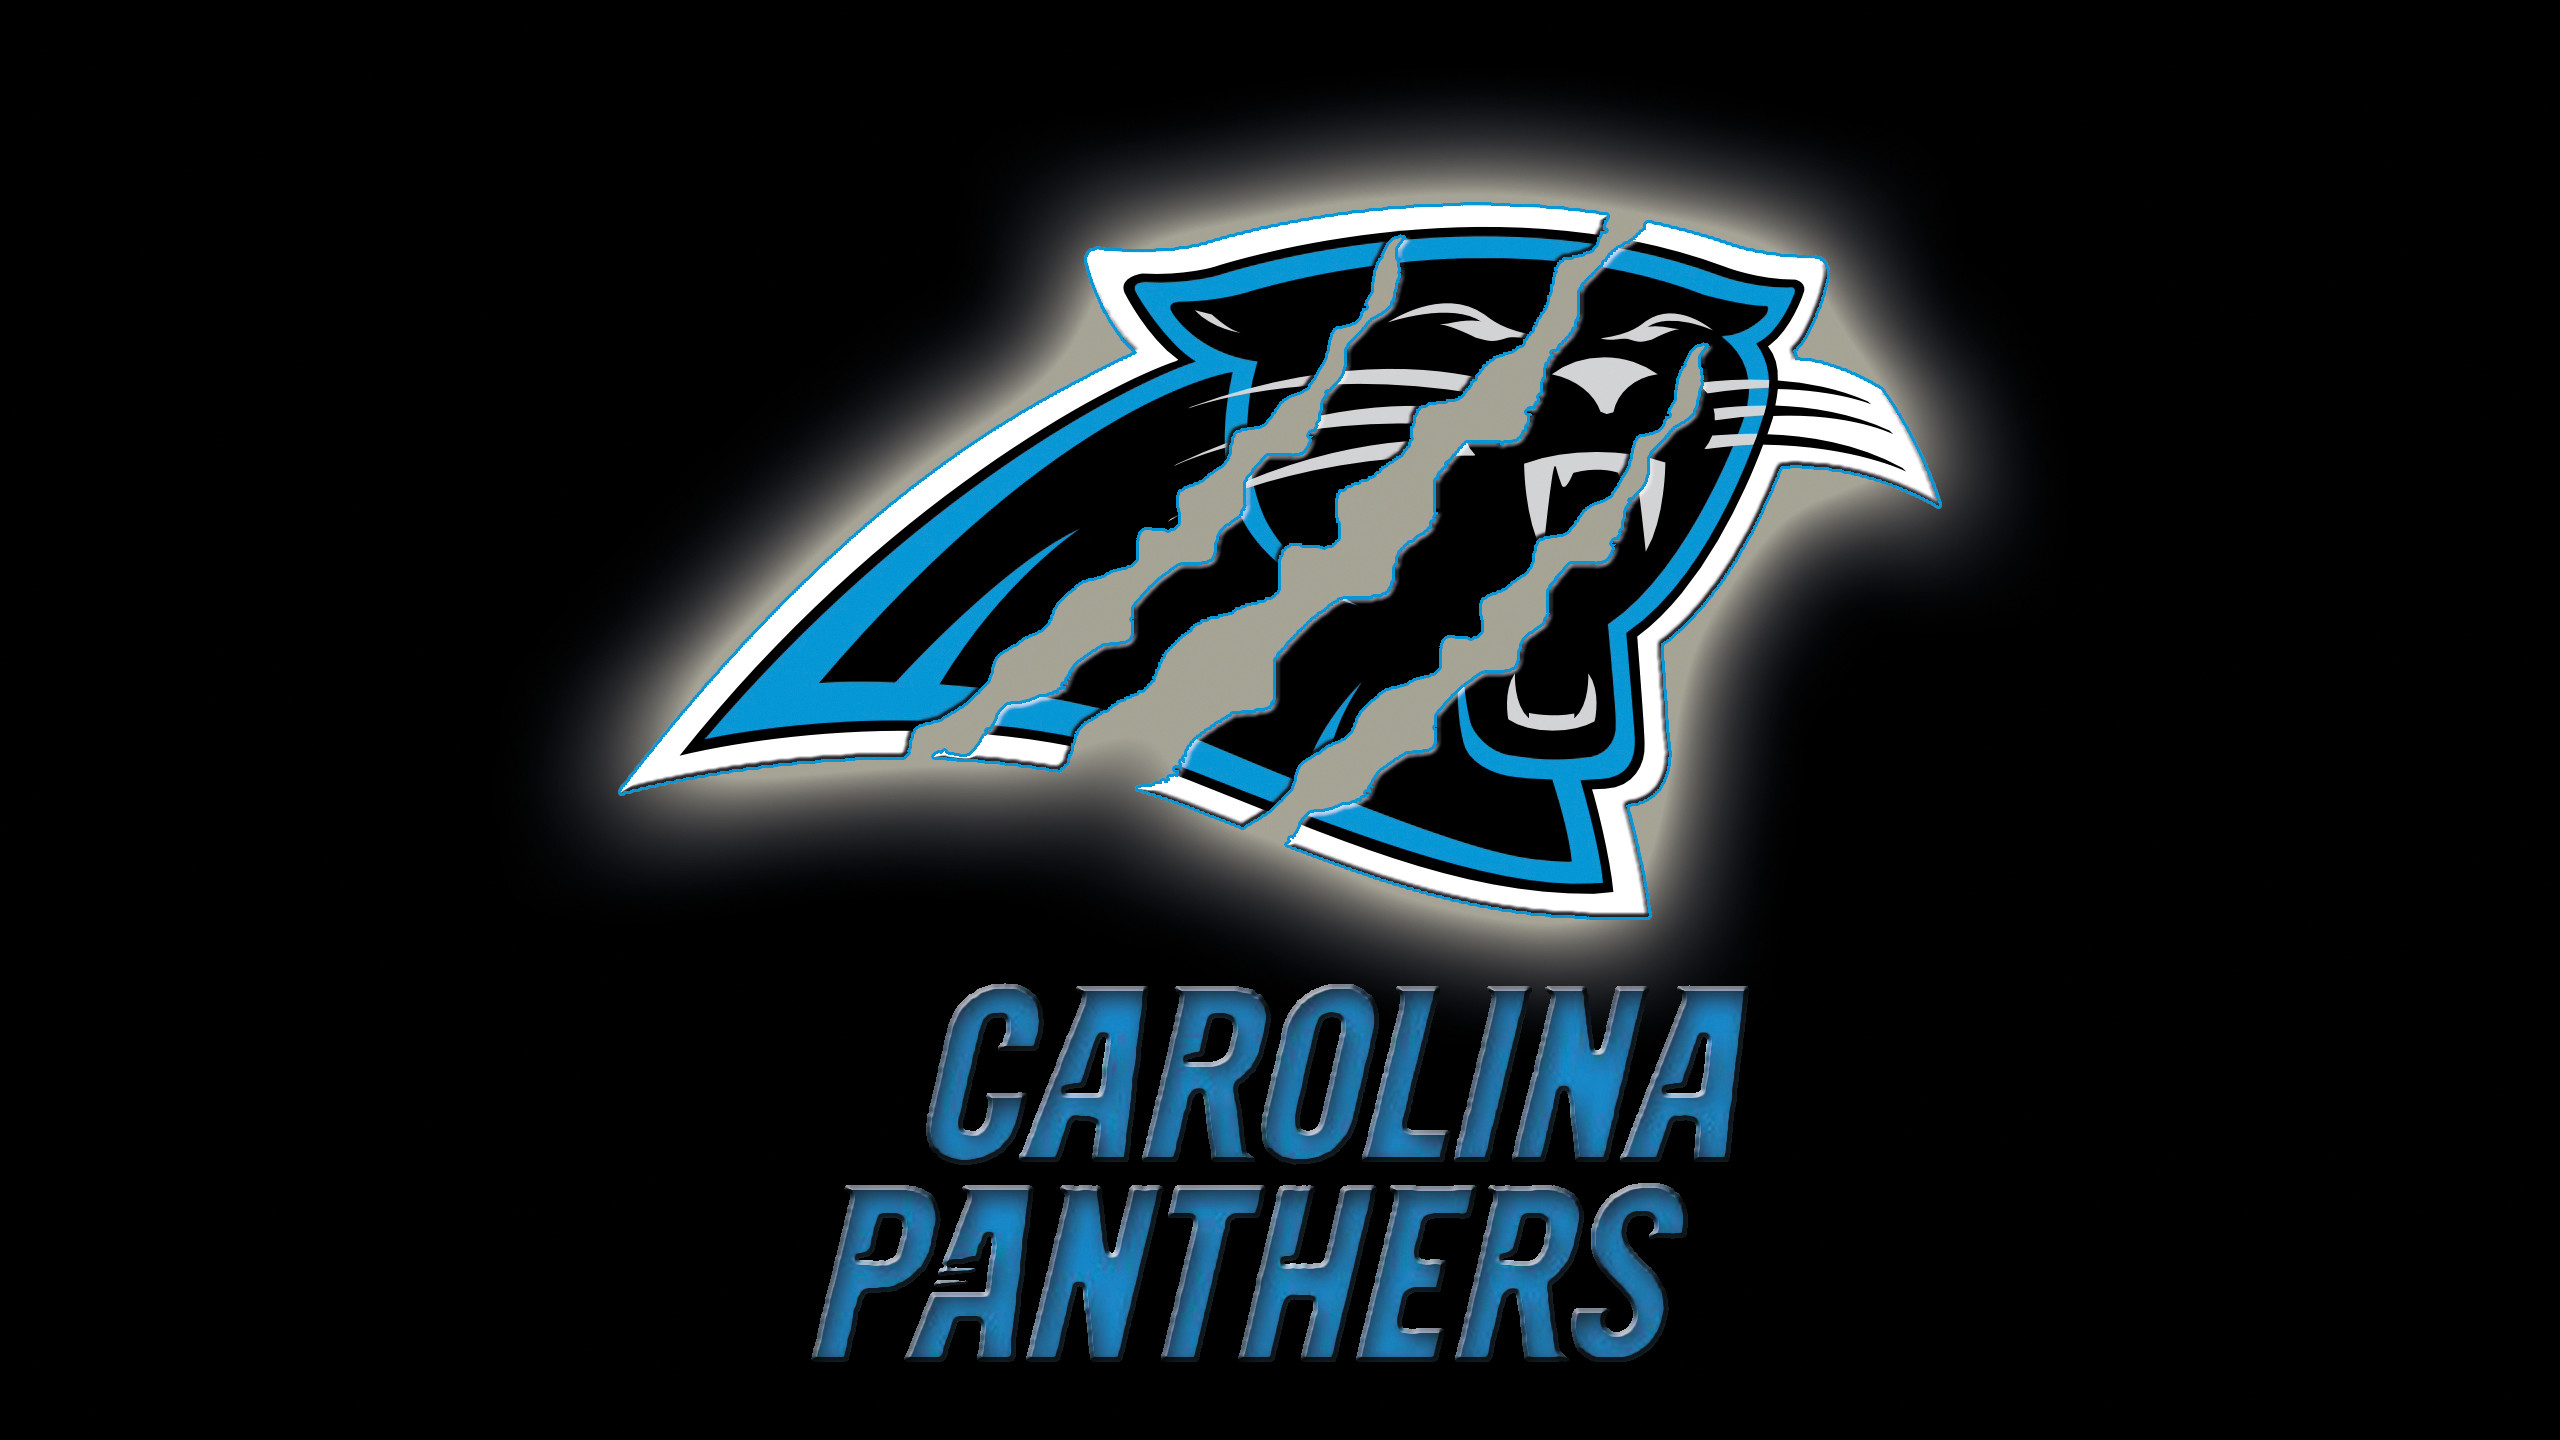 2560x1440 Carolina Panthers Logo Wallpaper HD | PixelsTalk Net